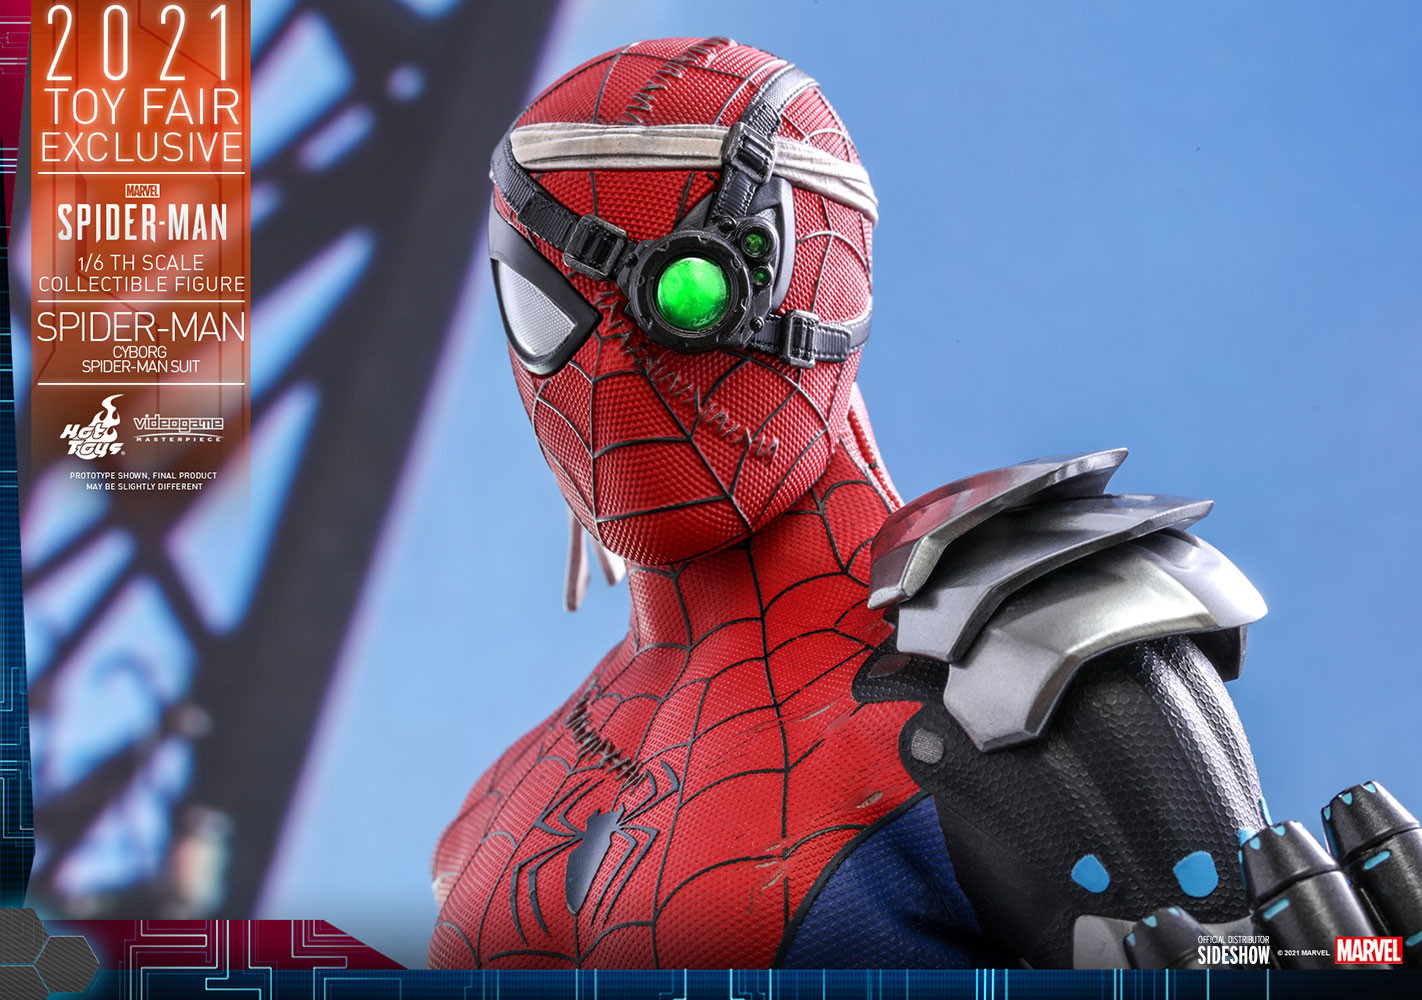 Spider-Man (Cyborg Spider-Man Suit) Exclusive Edition - Prototype Shown